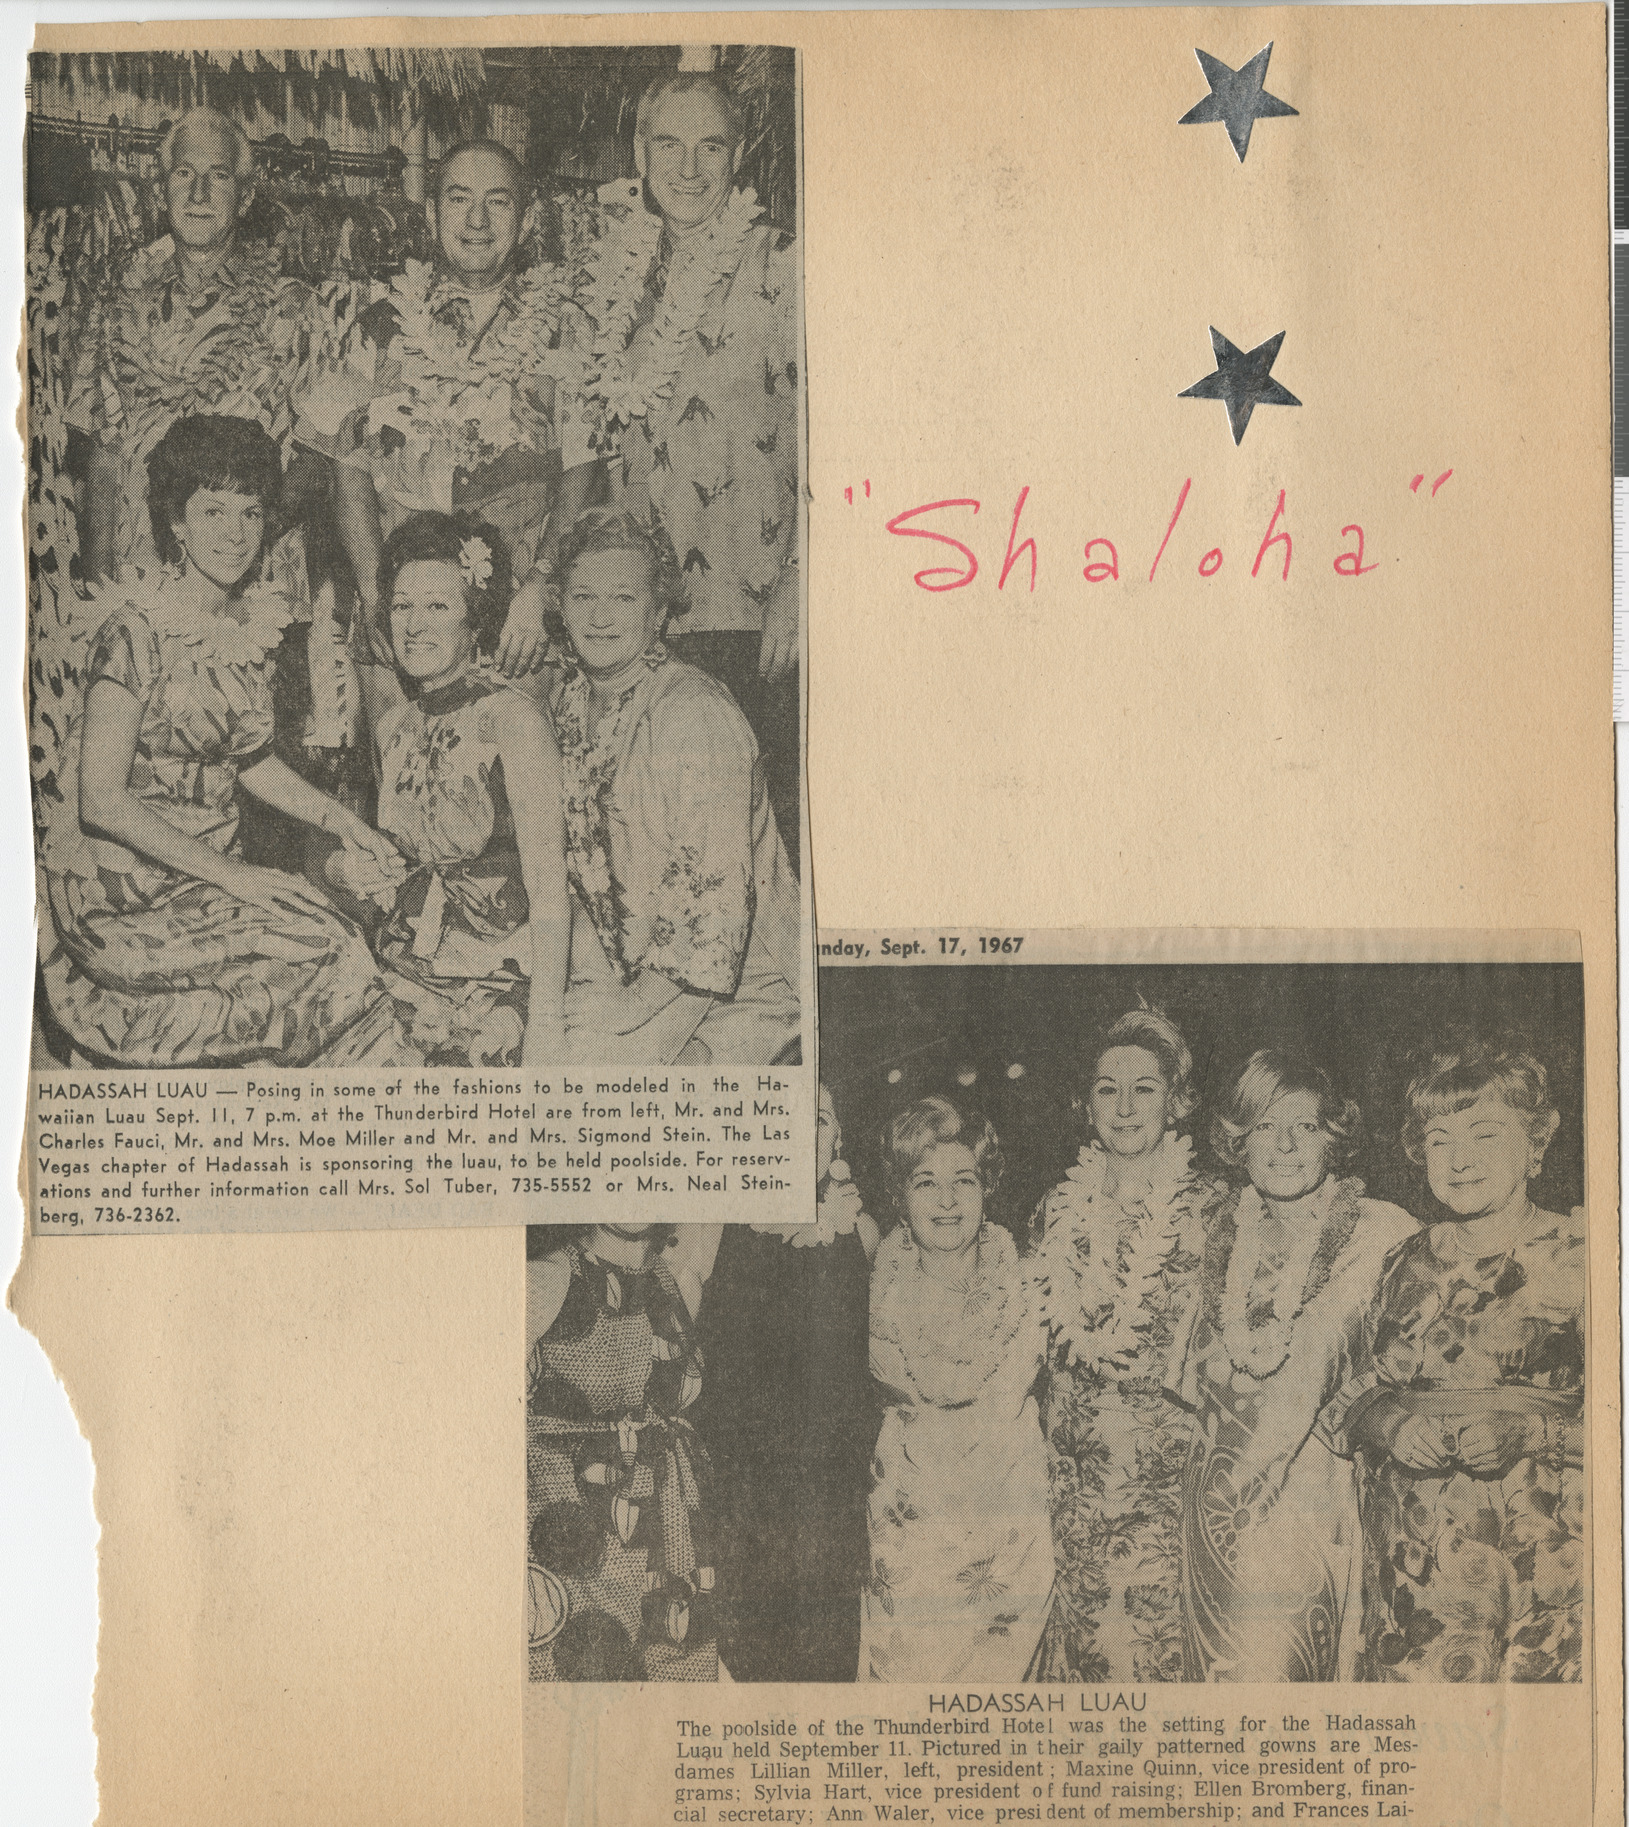 Newspaper clippings, Hadassah Luau, publication and date unknown, and Hadassah Luau, publication unknown, September 17, 1967